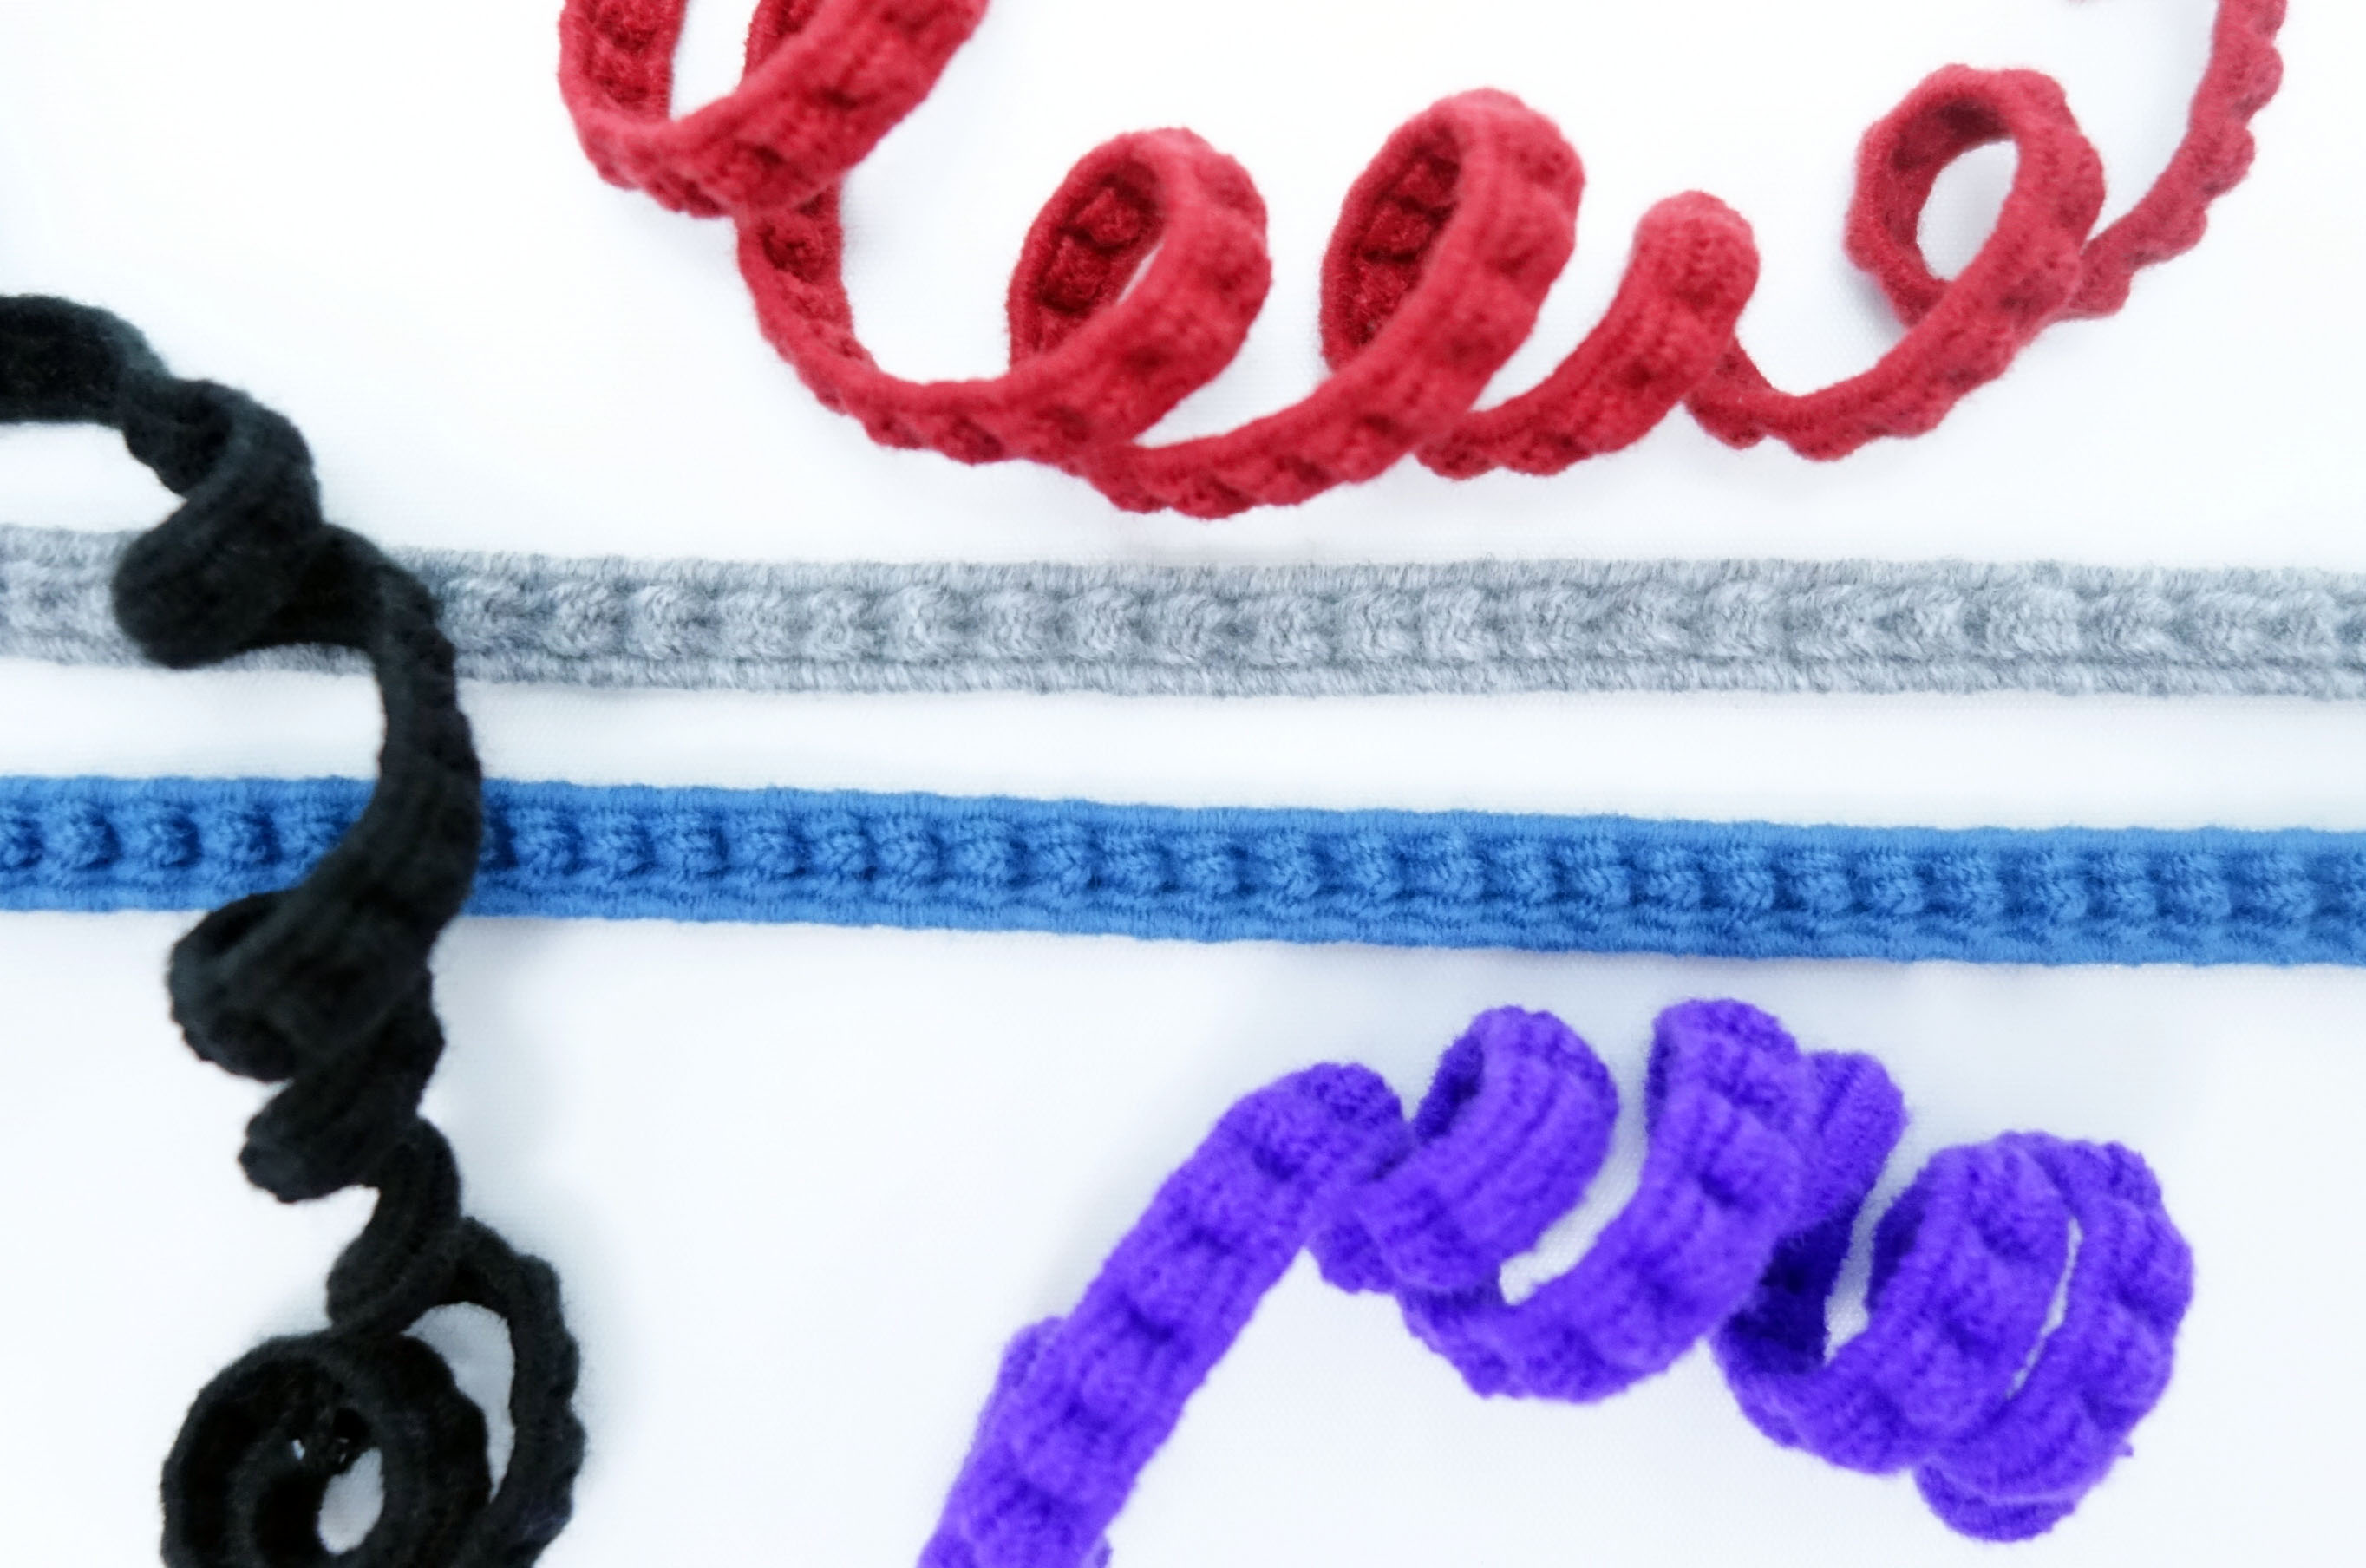 rigid textile cords braided